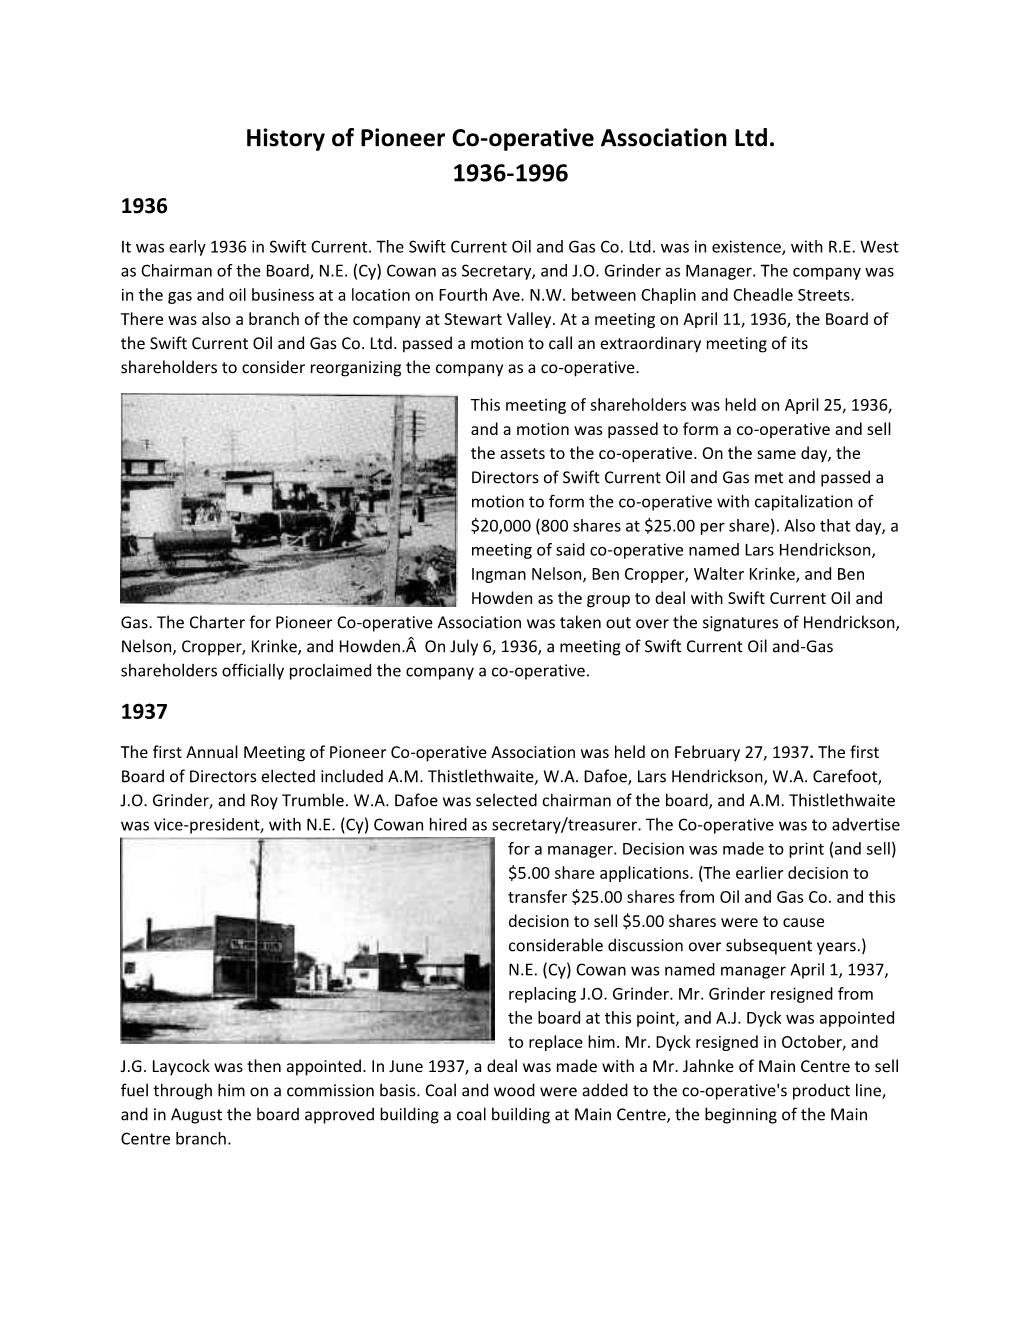 History of Pioneer Co-Operative Association Ltd. 1936-1996 1936